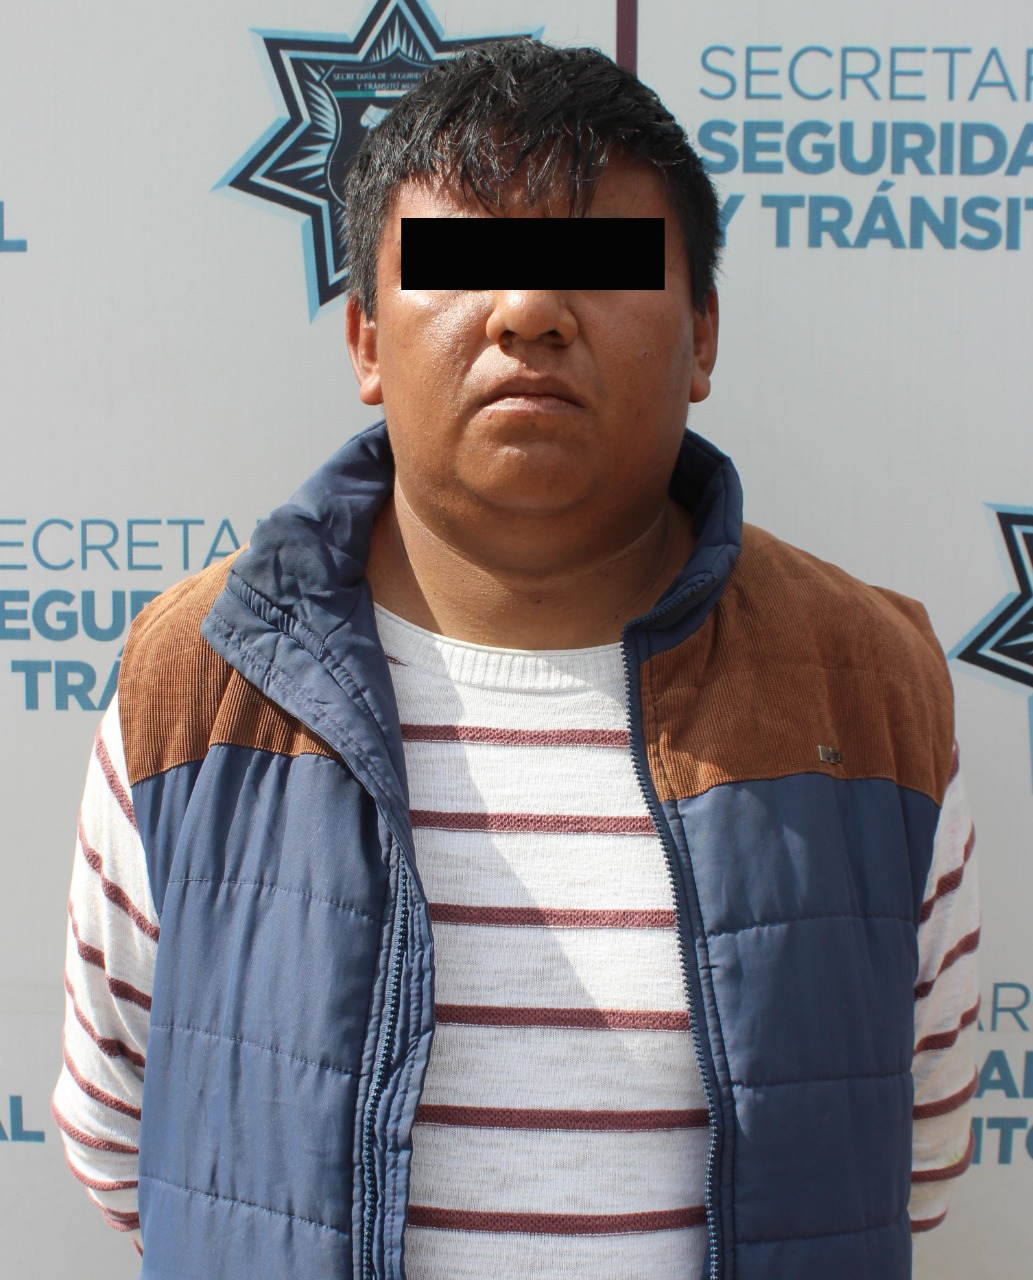 SSC, Agente del Ministerio Público, robo, Puebla, Ministerio Público, camioneta, mercancía